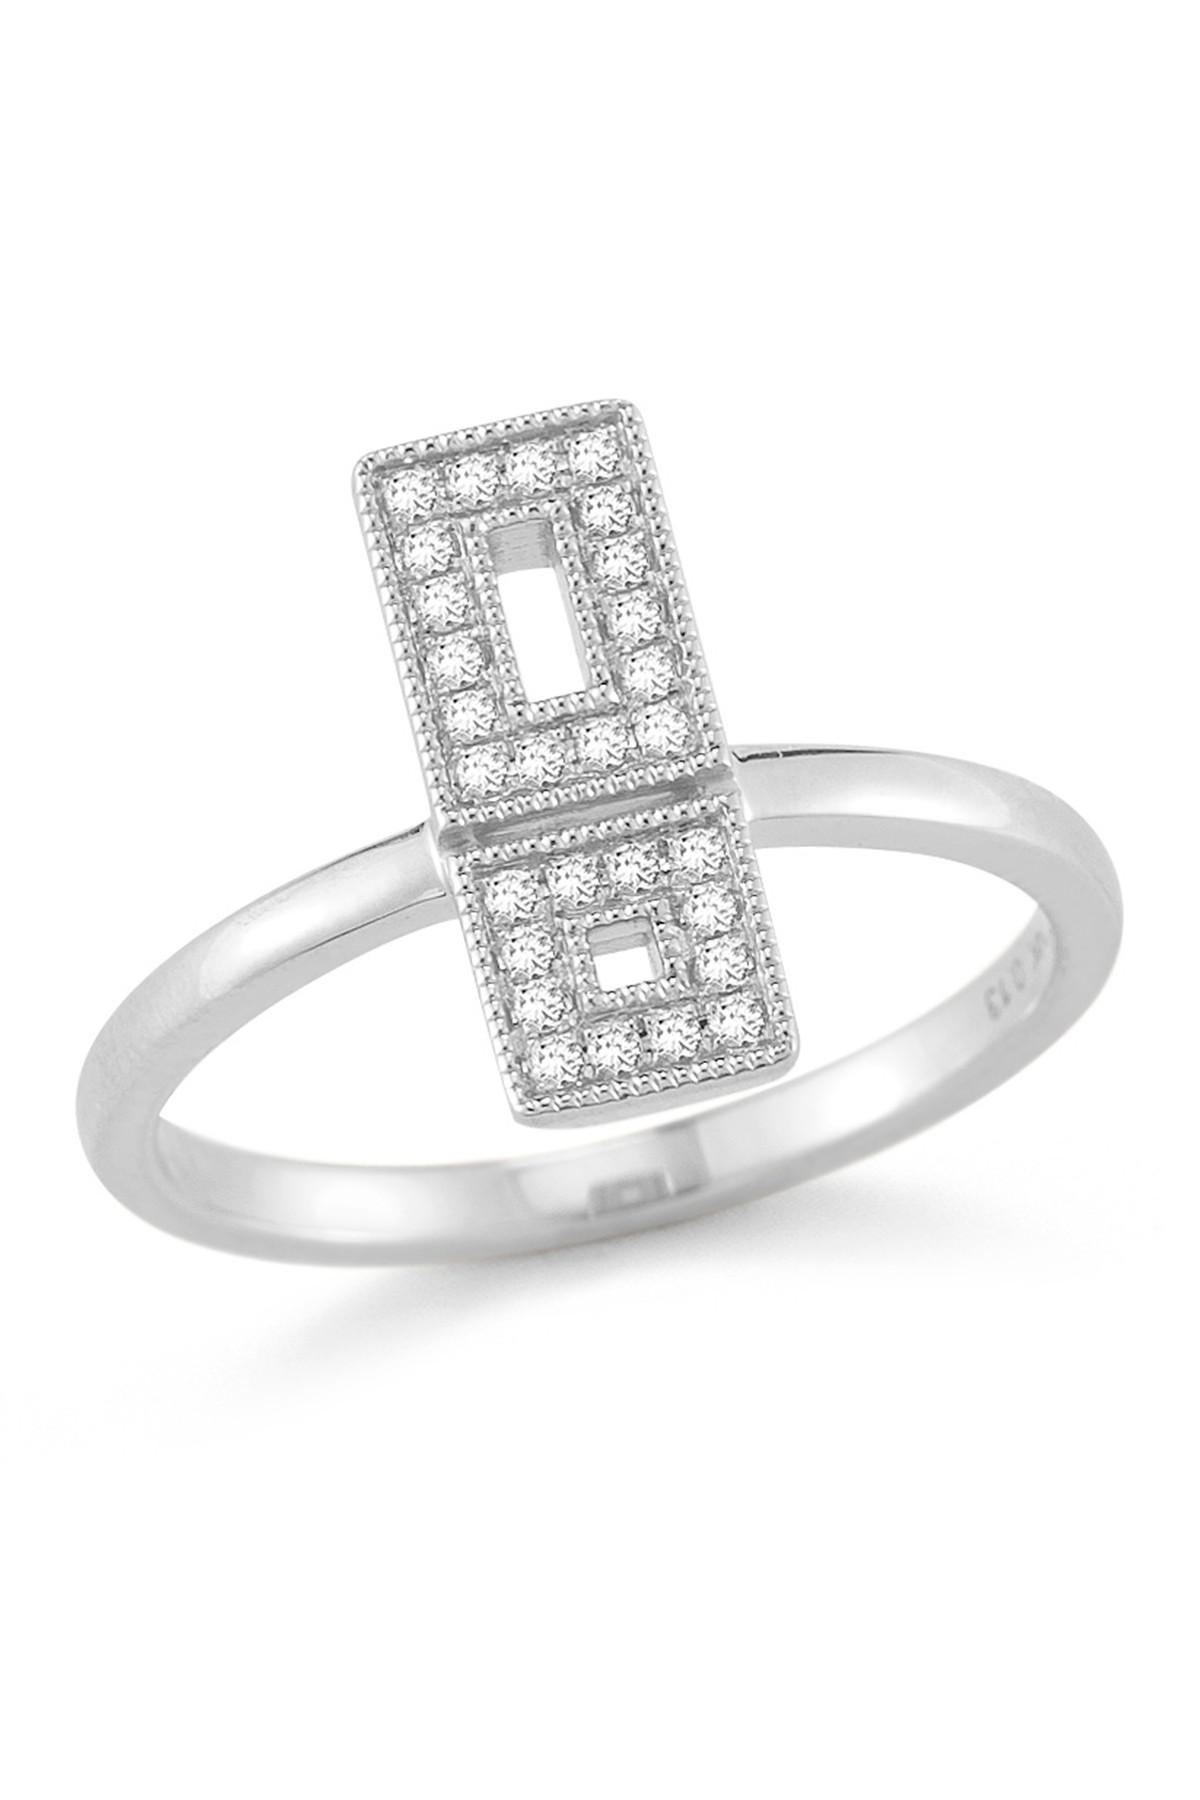 Dana Rebecca 14k White Gold Allison Joy Diamond Ring - Size 6 - 0.13 ...